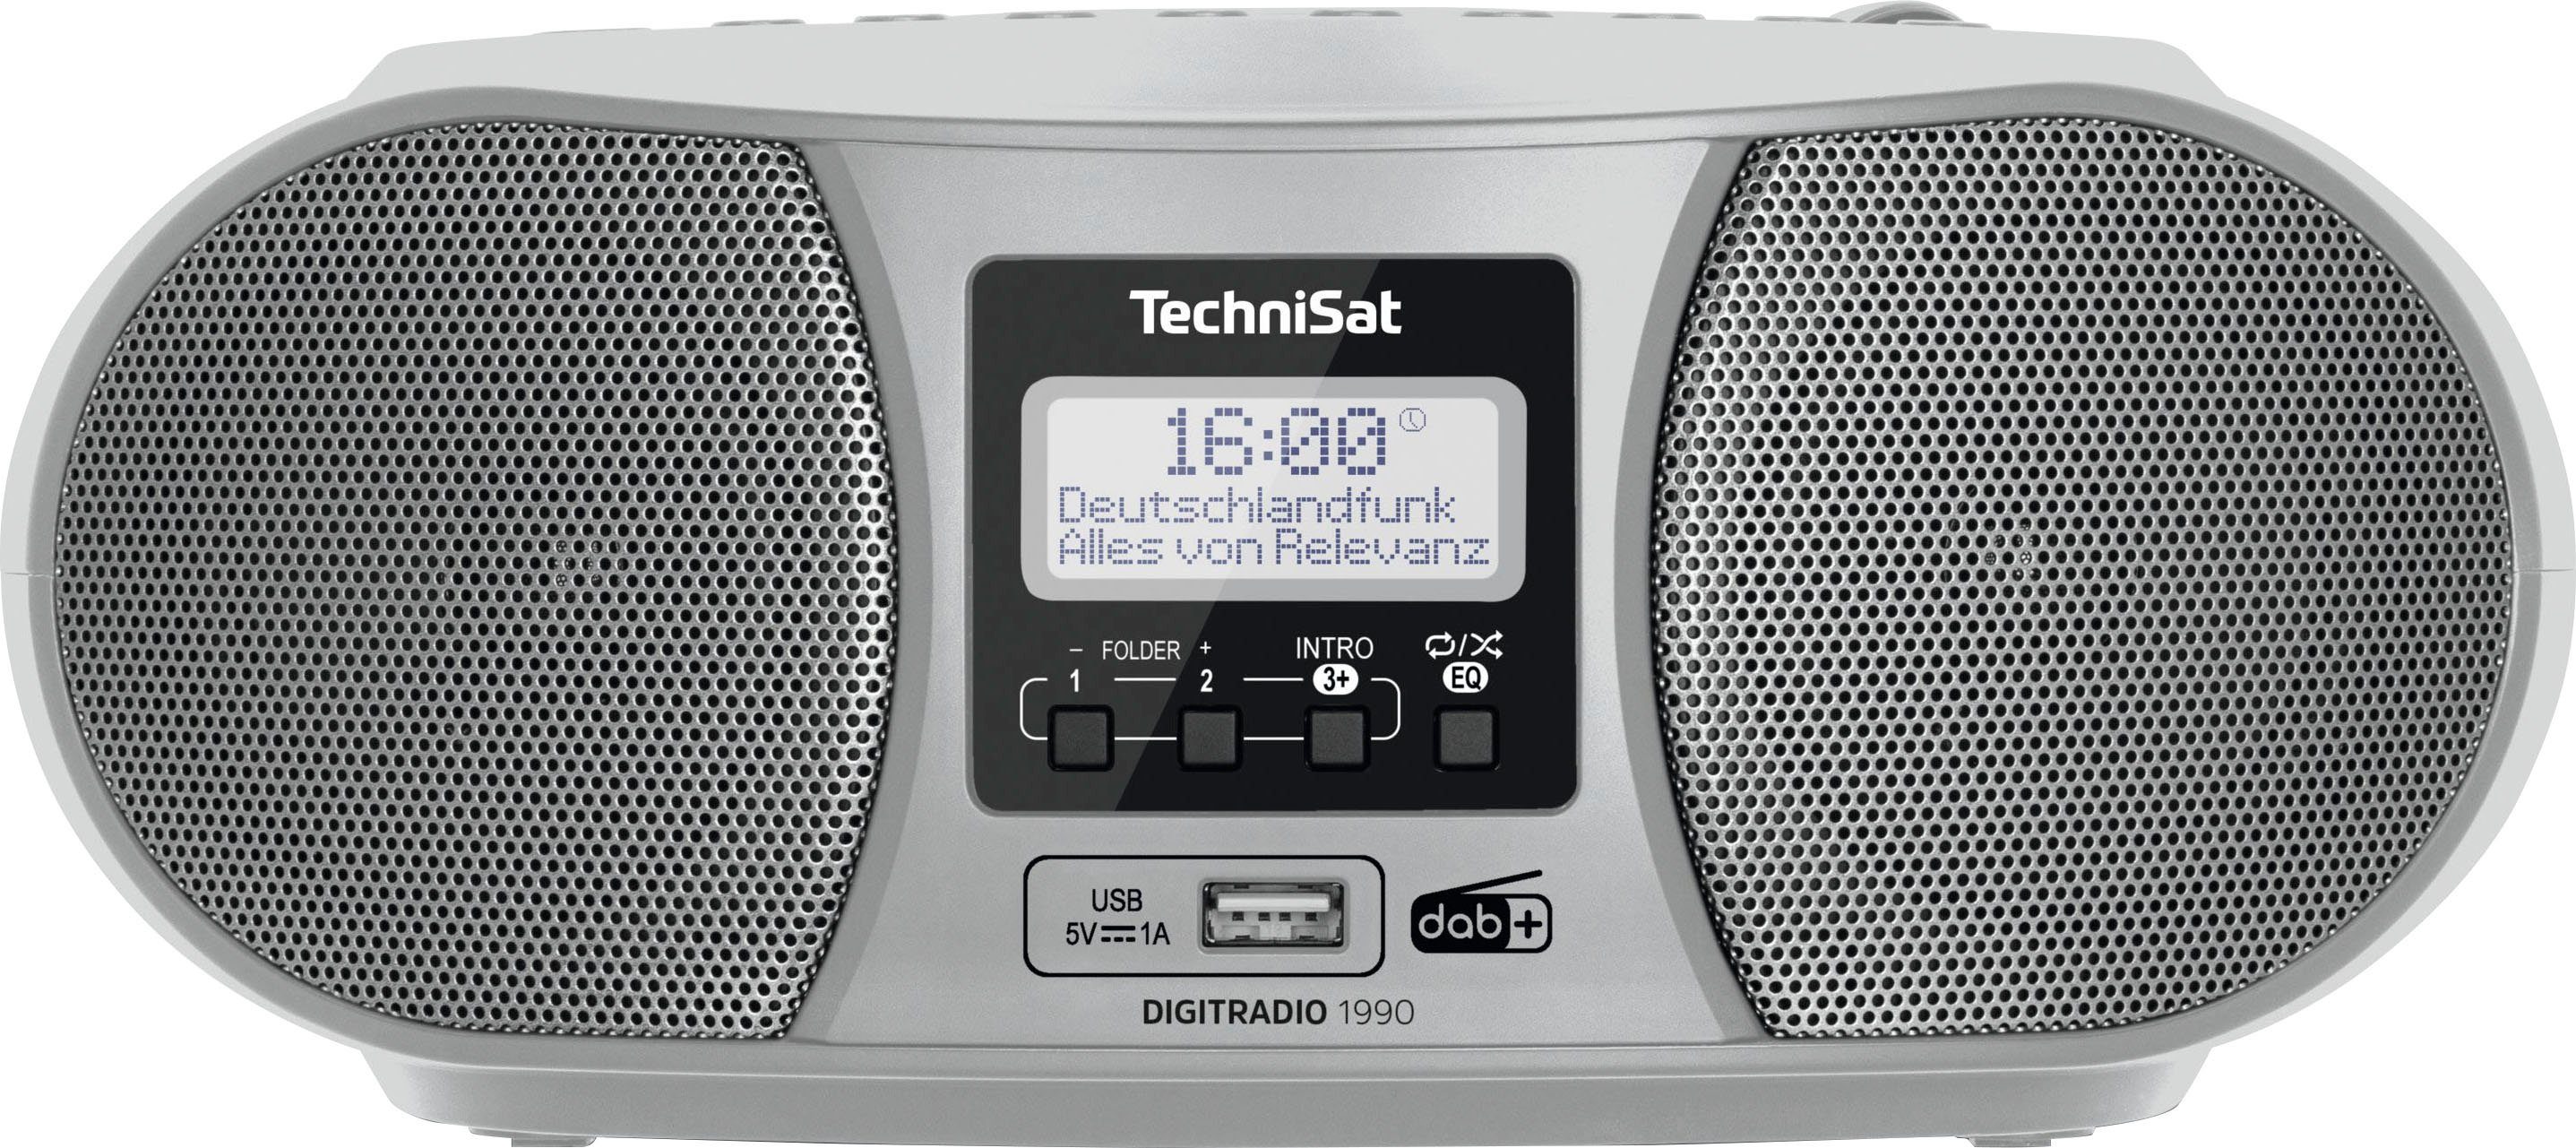 TechniSat DIGITRADIO 1990 Digitalradio (DAB) (Digitalradio (DAB), UKW mit RDS, 3 W, CD-Player) silber